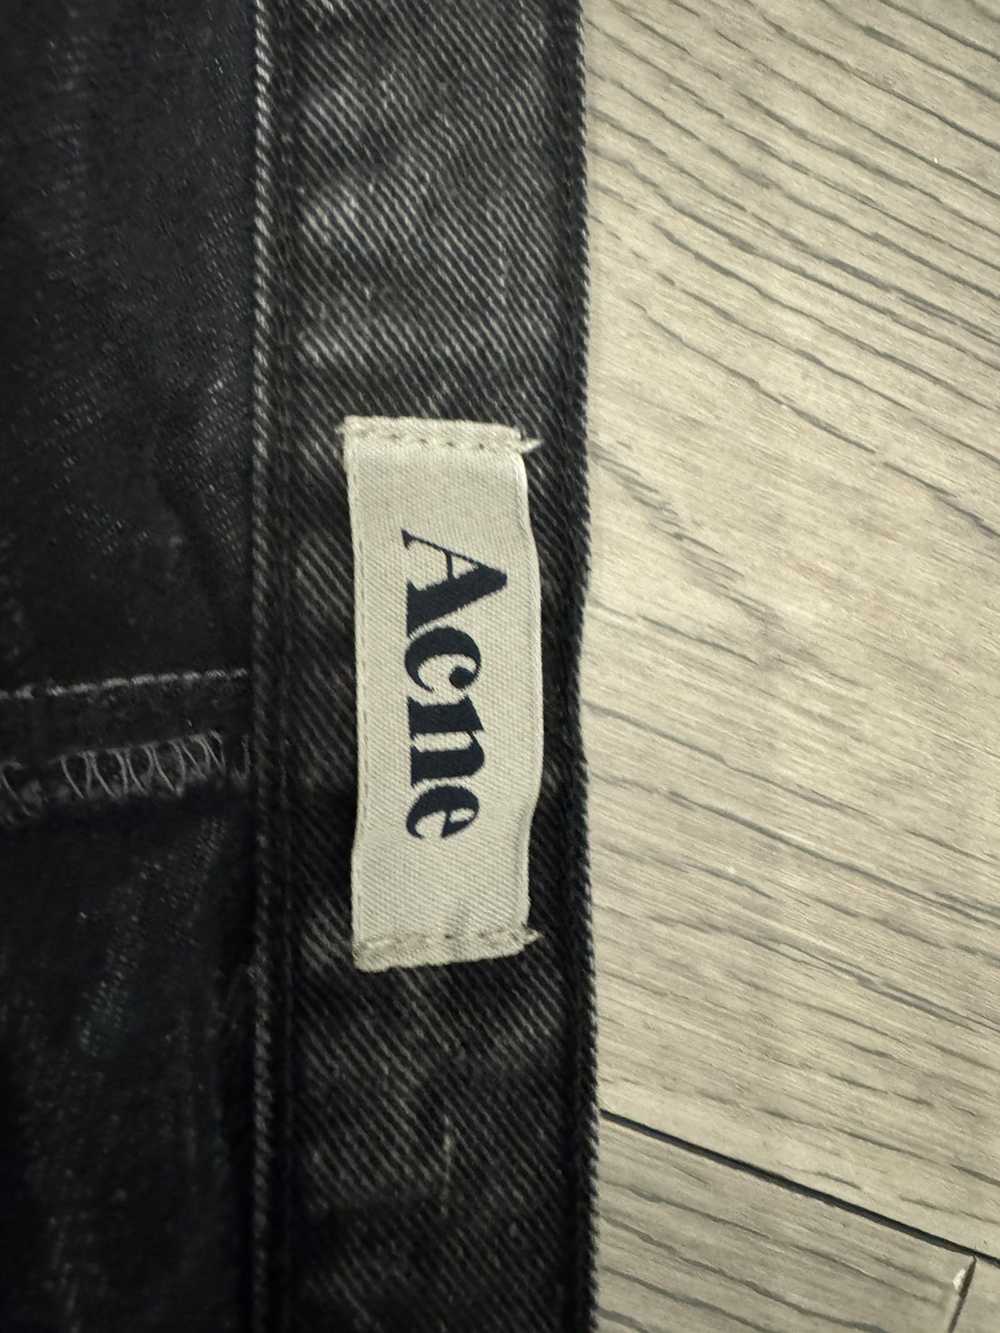 Acne Studios Acne studio jeans - image 4